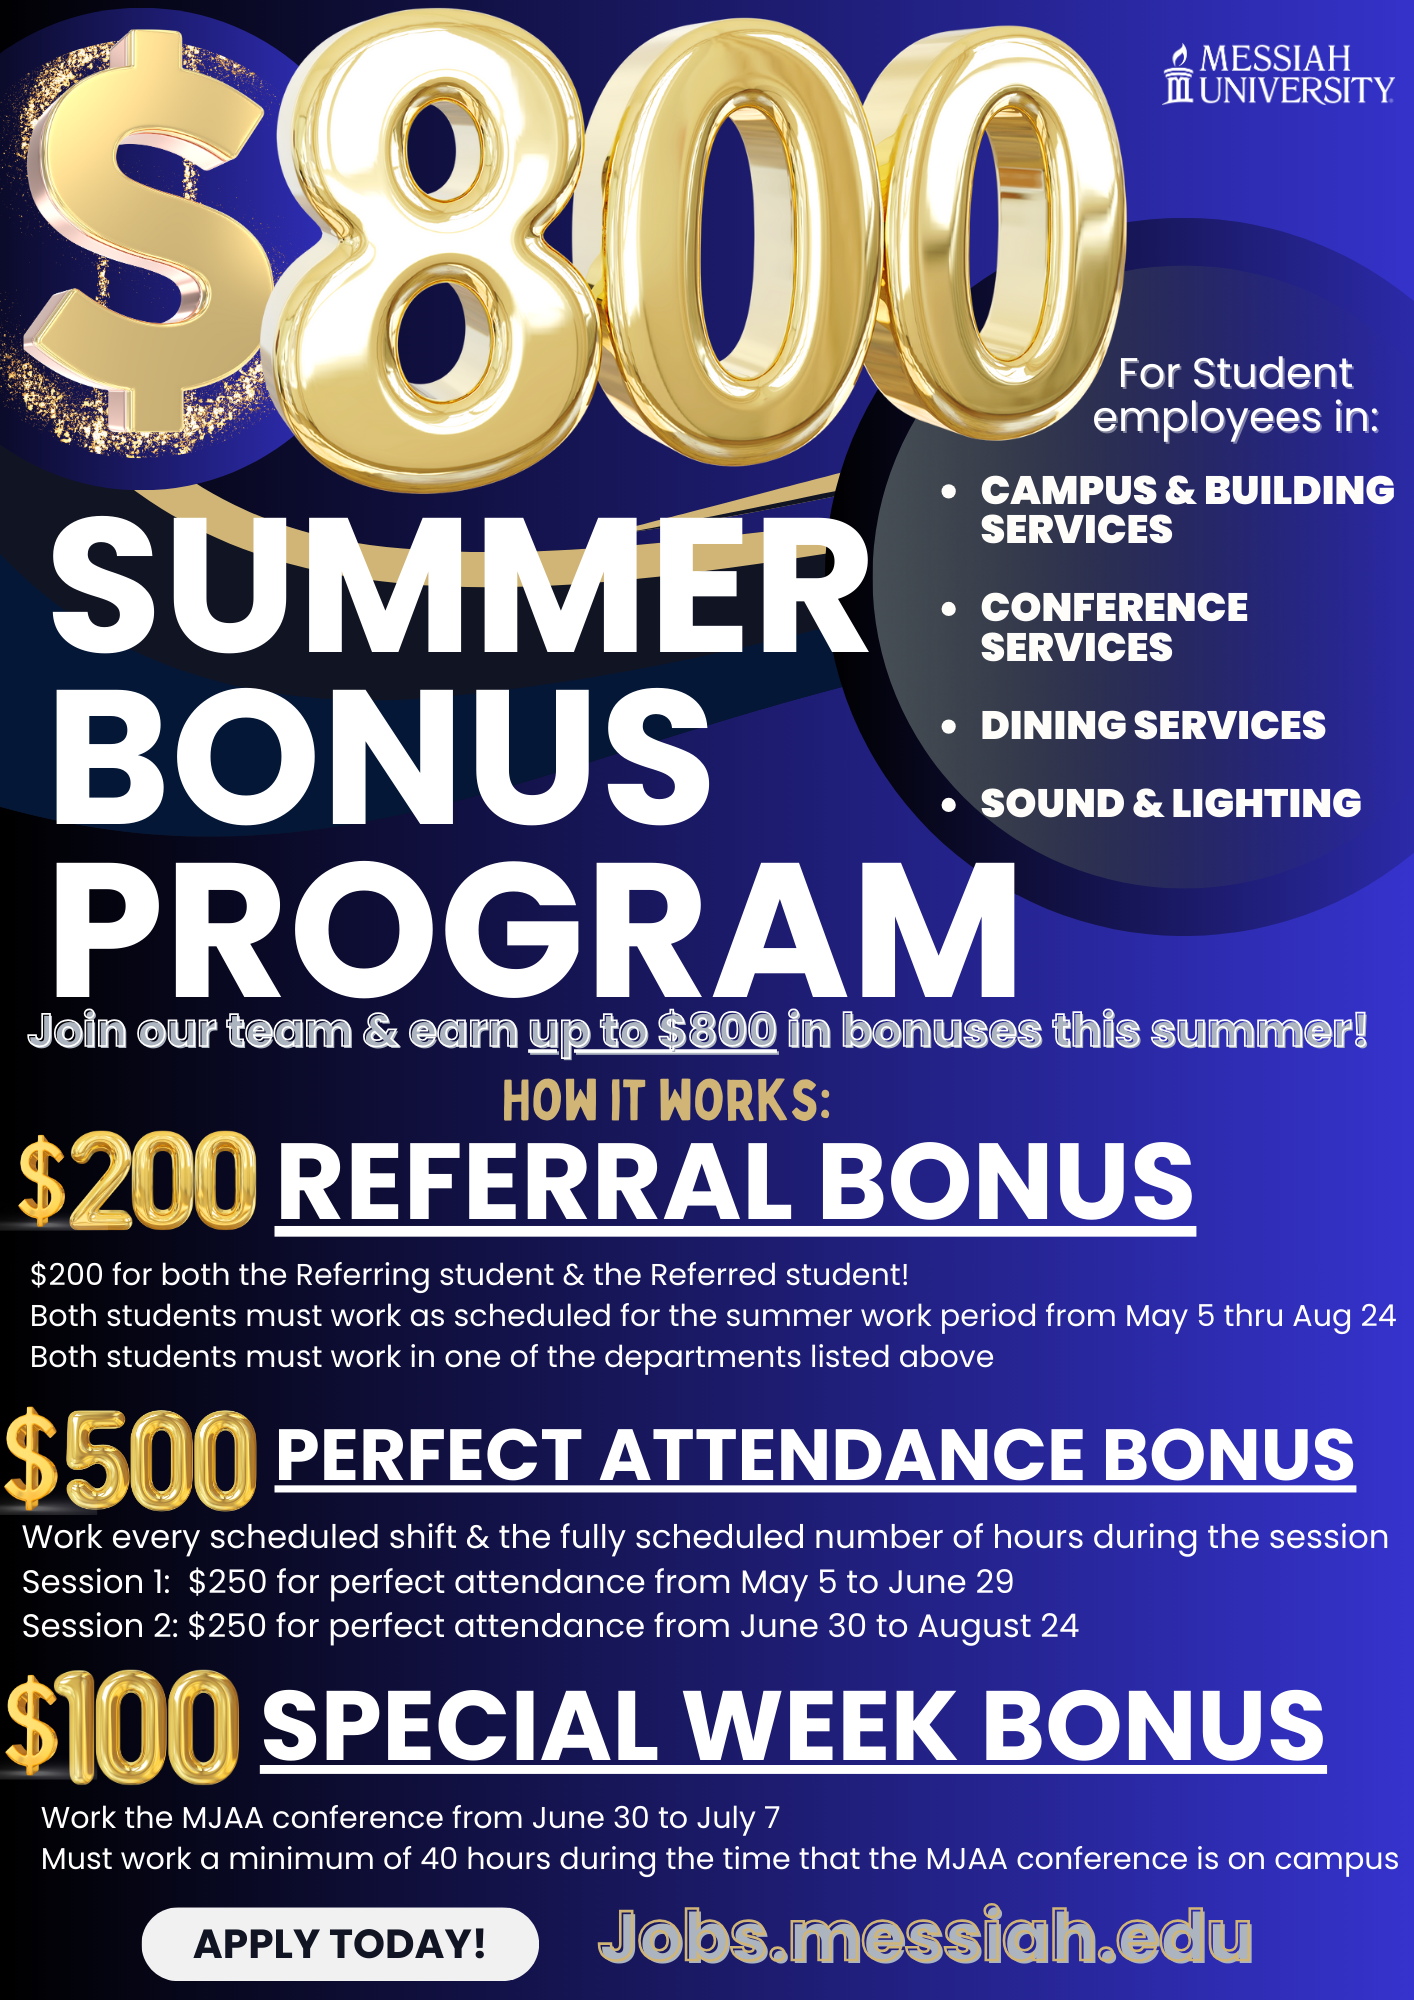 Student Employment summer bonus opportunity